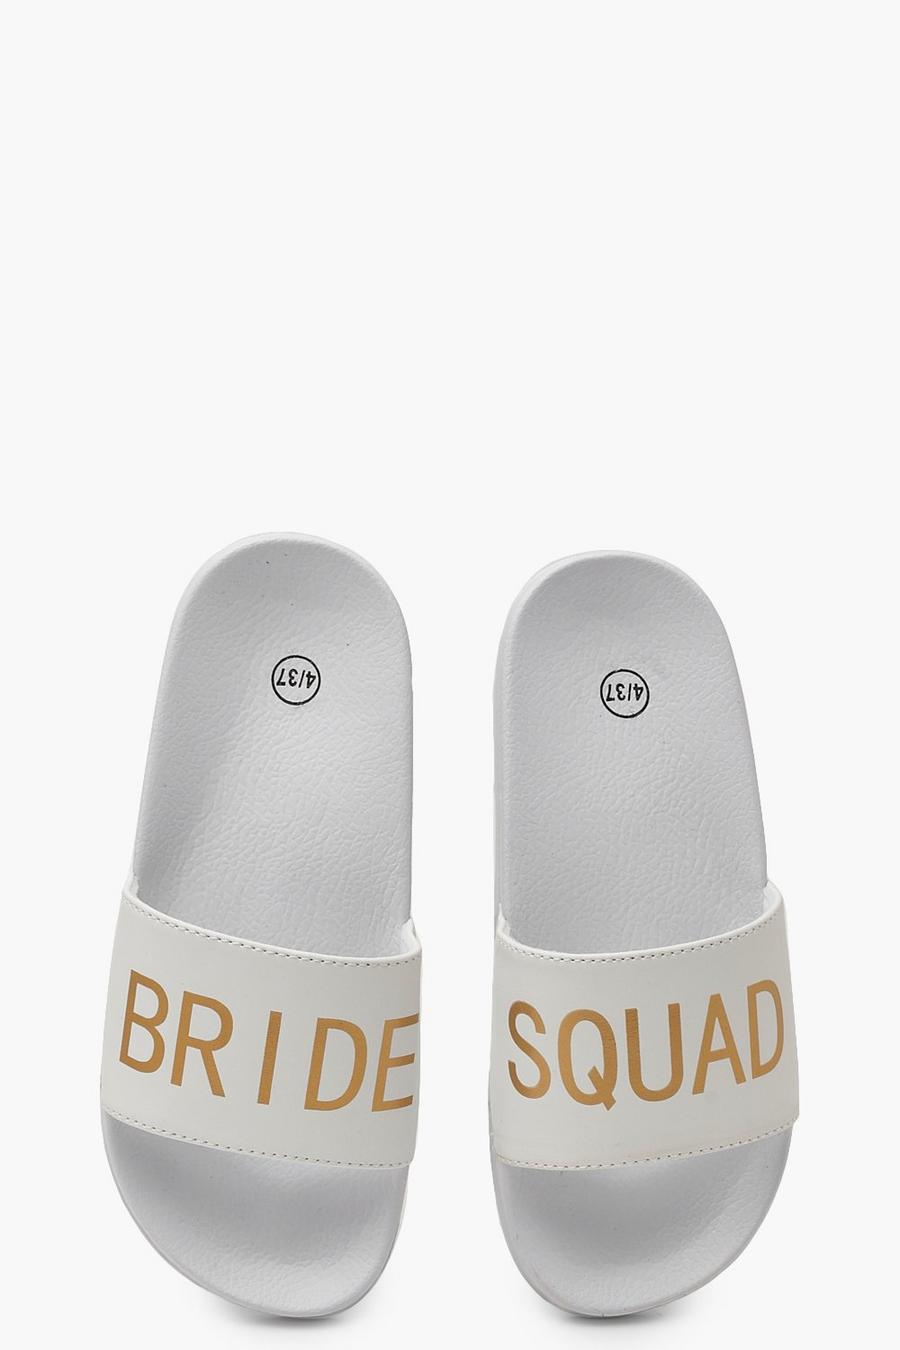 Sandalias con eslogan “Bride Squad”, Blanco image number 1